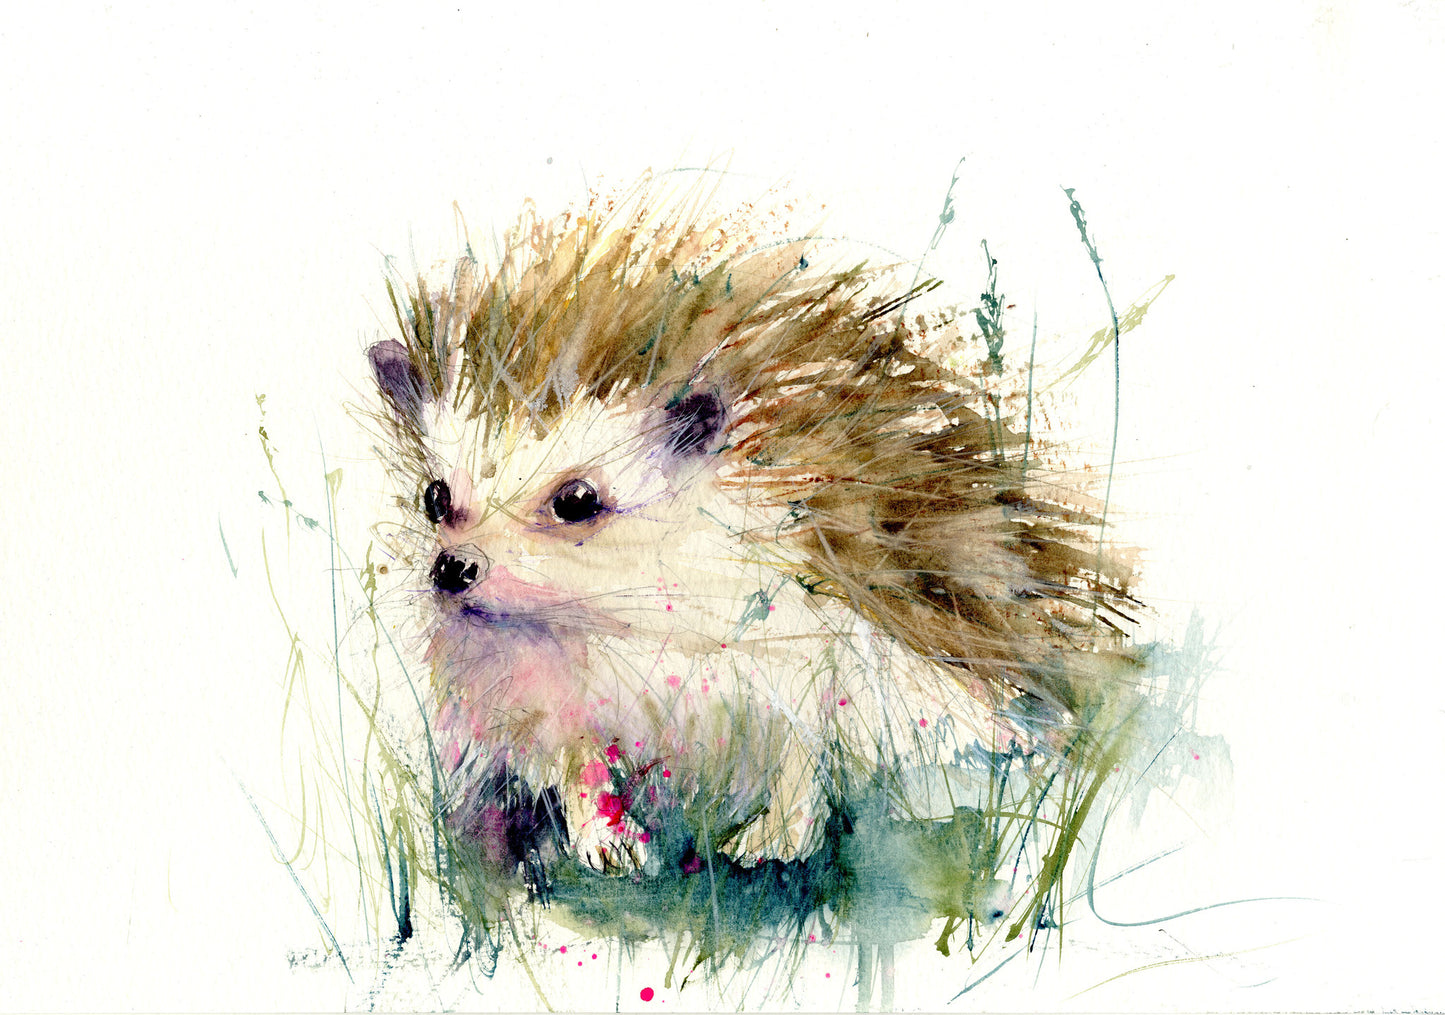 limited edition print "Hedgehog" - Jen Buckley Art limited edition animal art prints